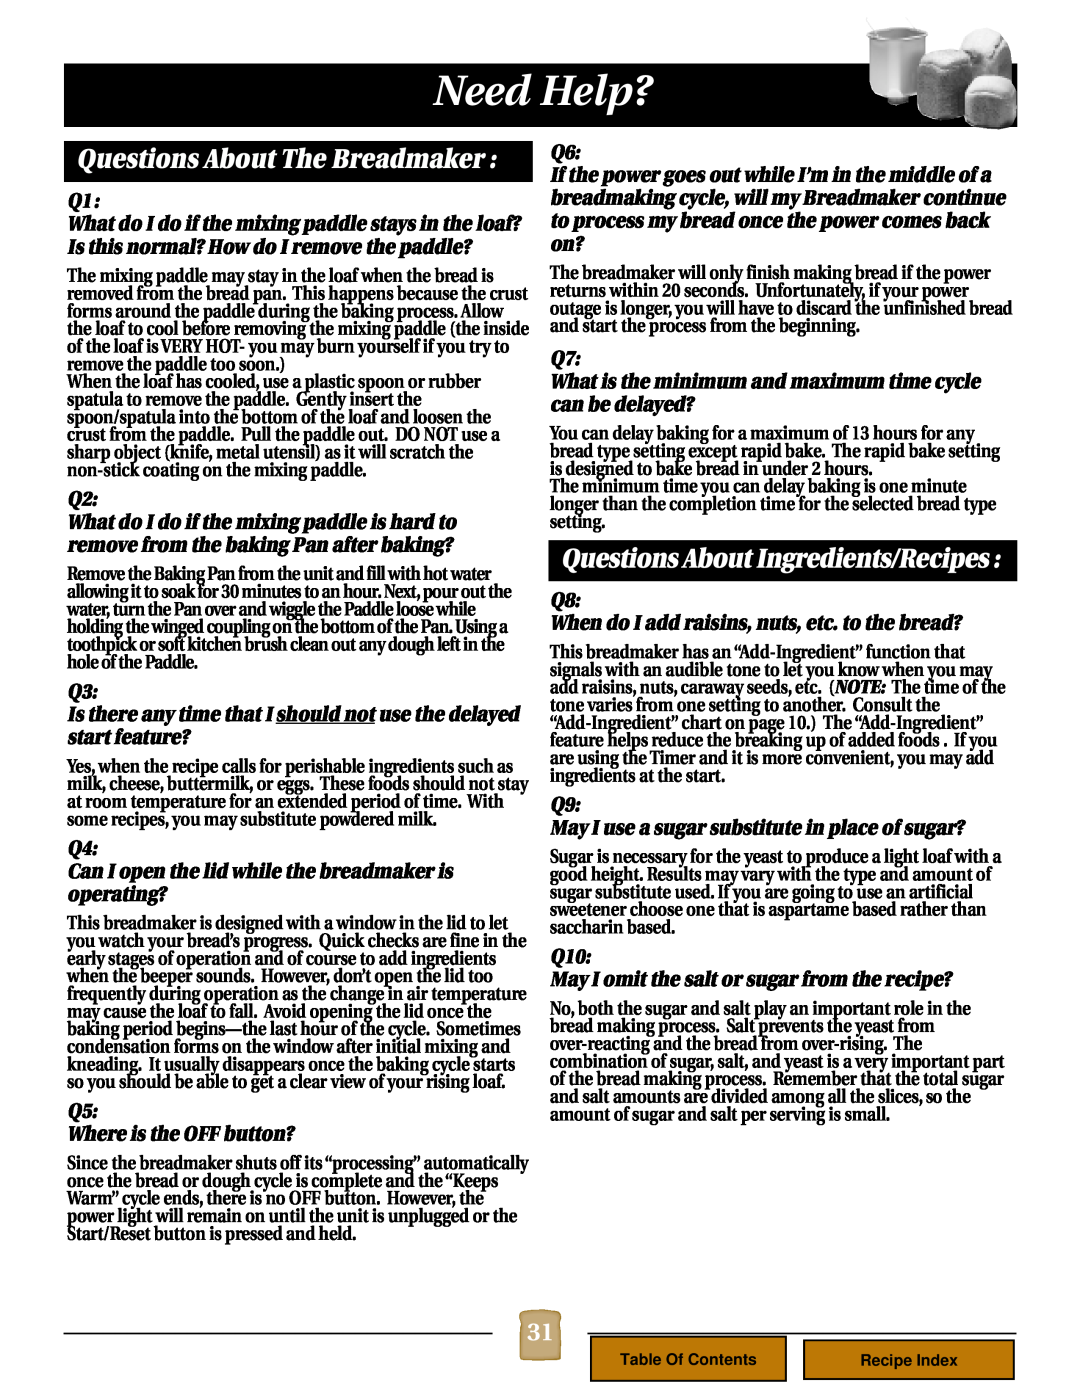 Black & Decker B1620 operating instructions Need Help?, Questions About The Breadmaker, Questions About Ingredients/Recipes 